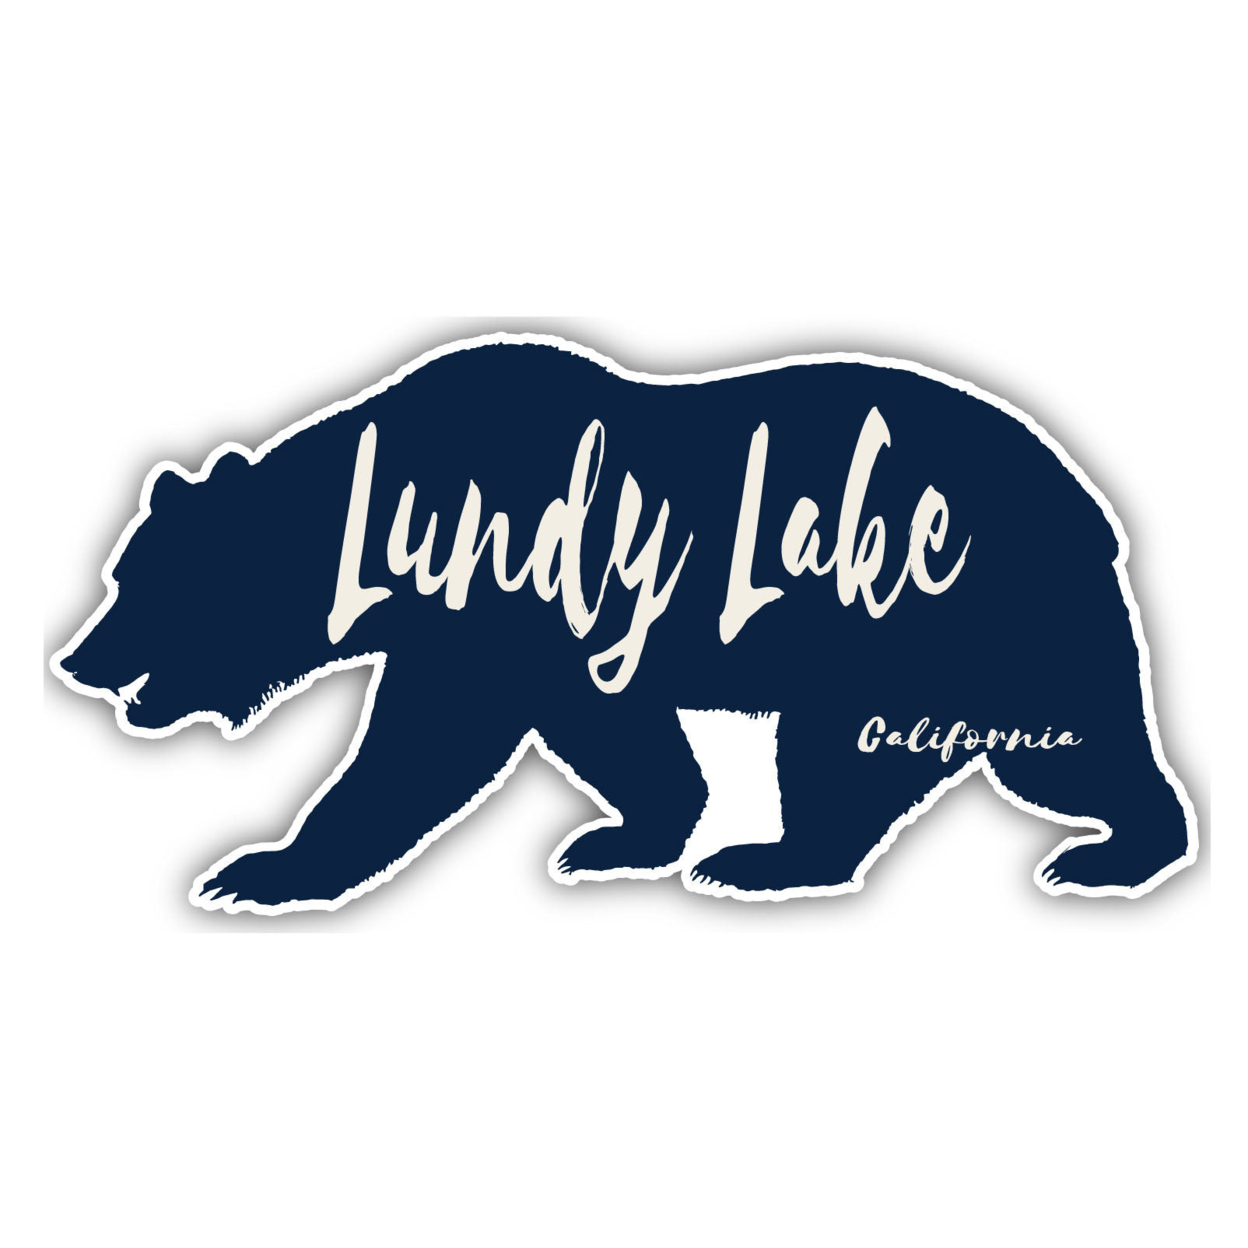 Lundy Lake California Souvenir Decorative Stickers (Choose Theme And Size) - 4-Inch, Bear